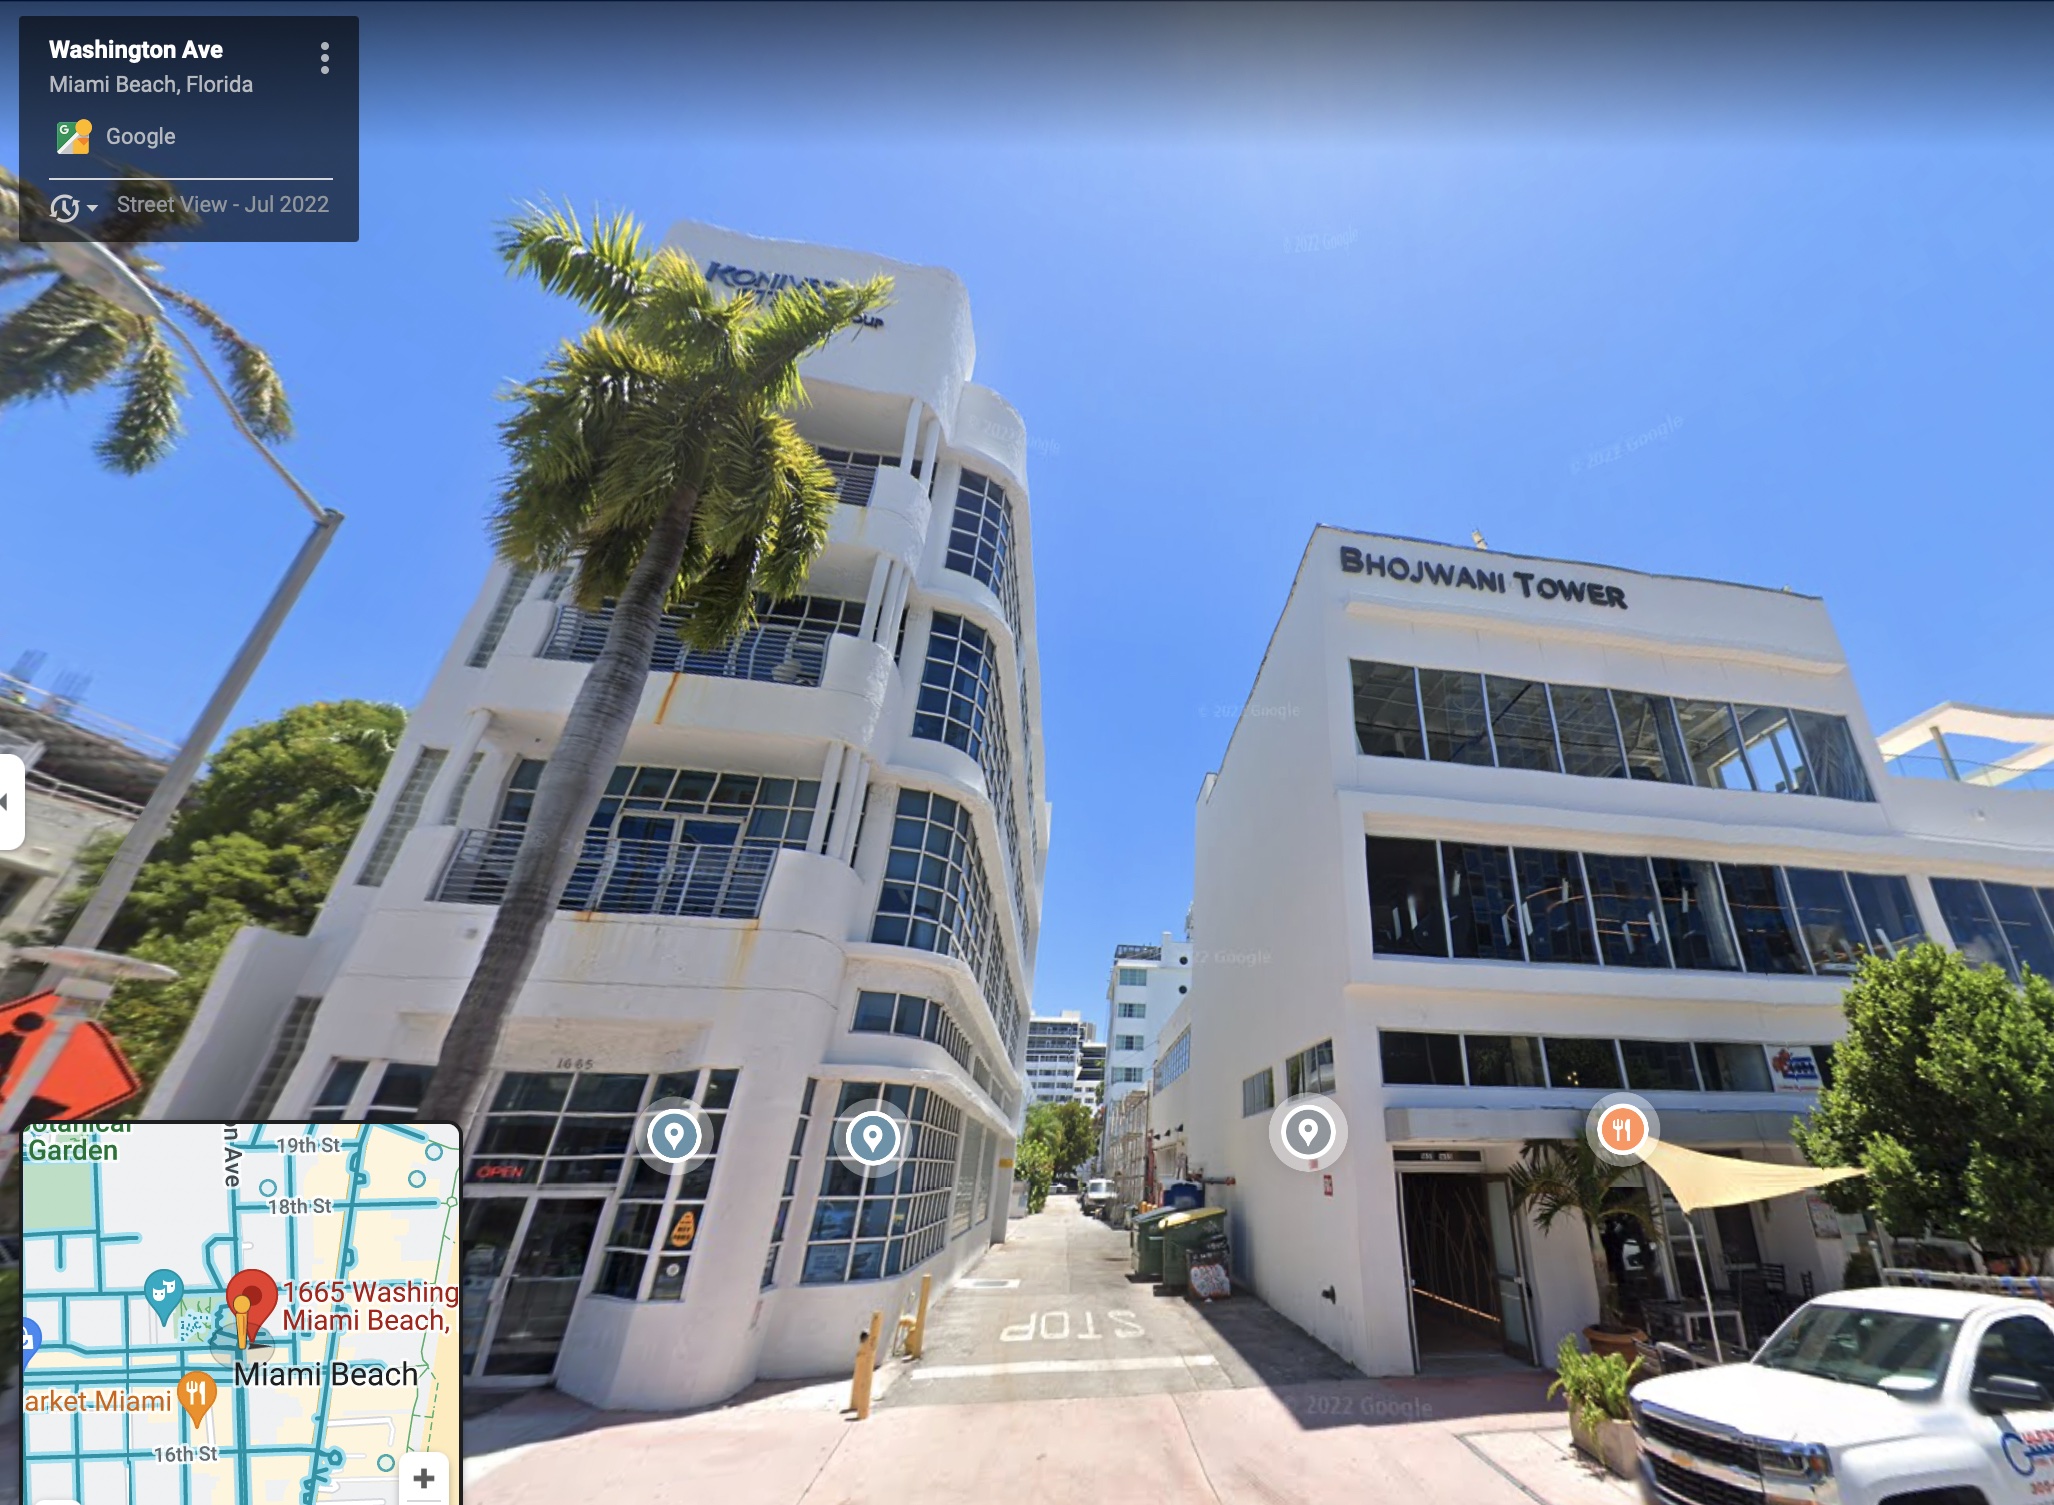 Walking Miami Design District in March 2022 